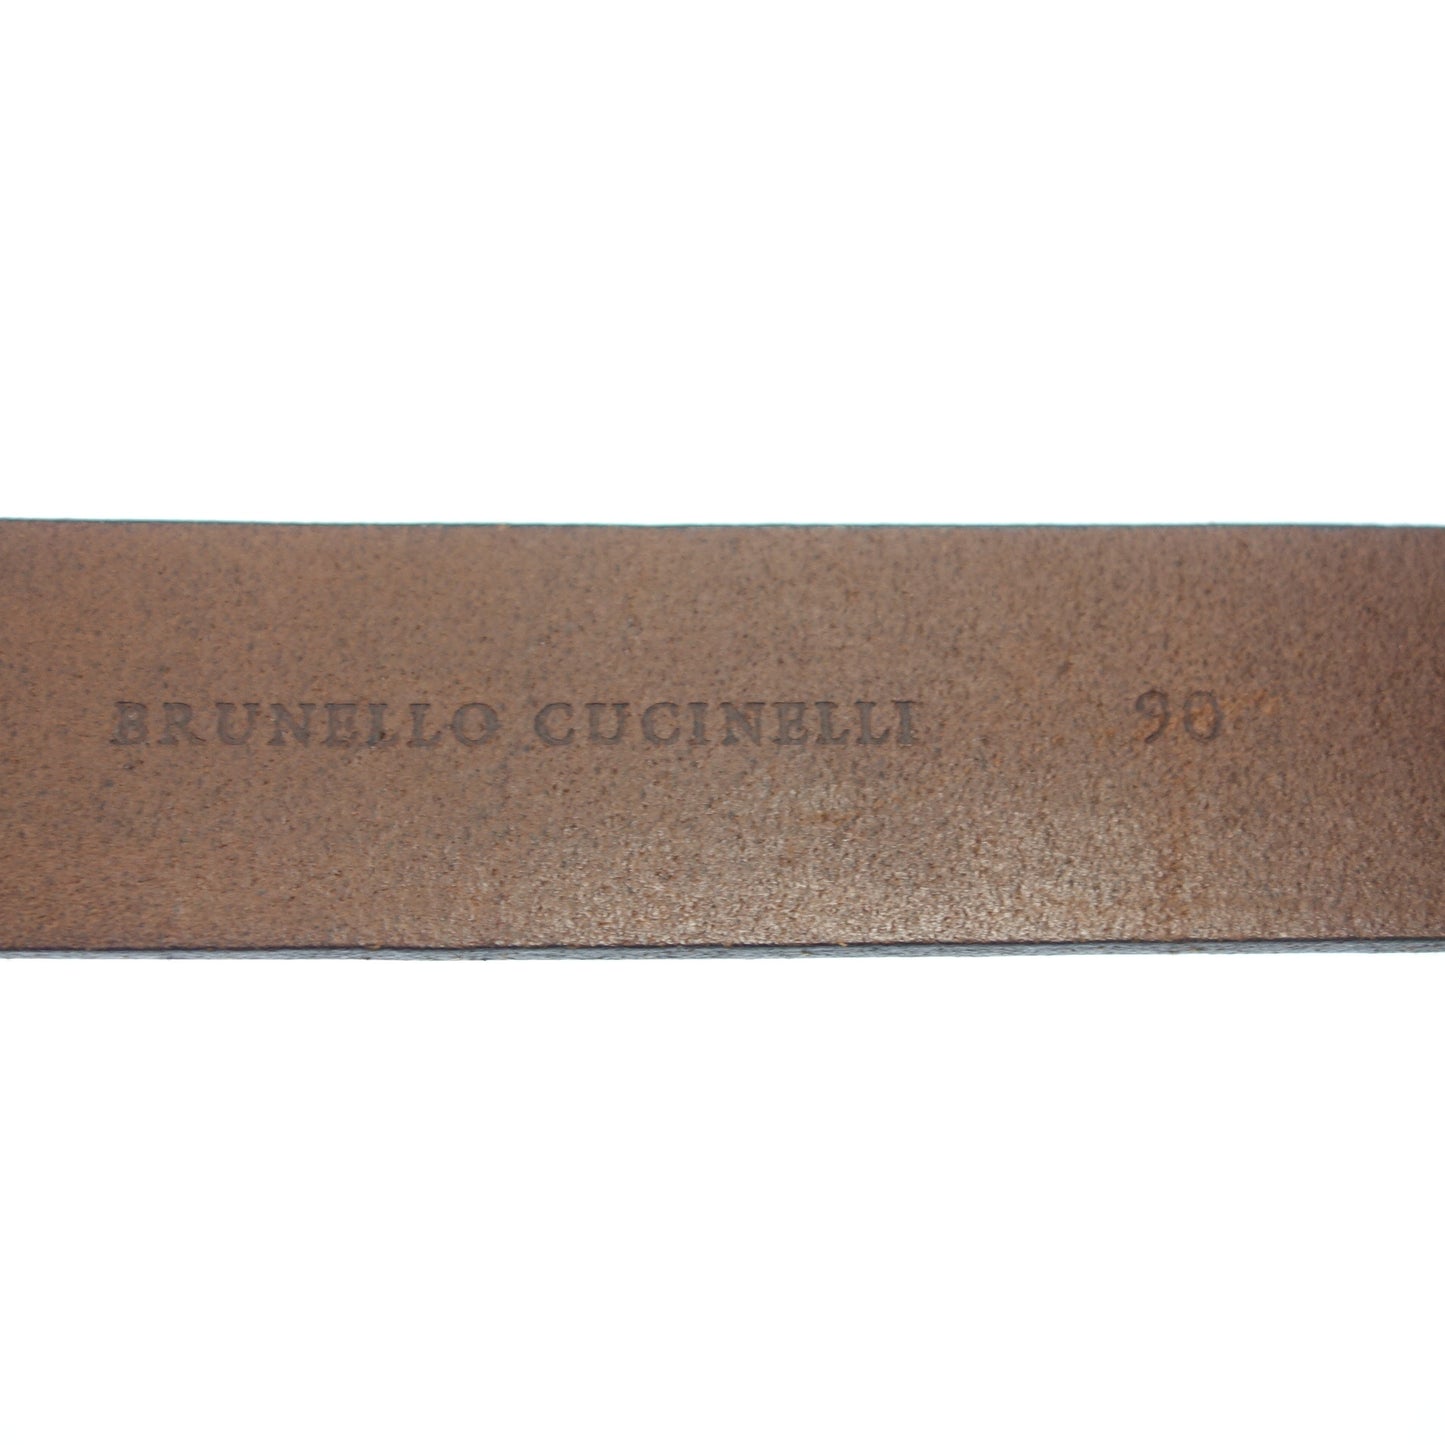 Brunello Cucinelli 皮革腰带环尺寸 90 棕色 BRUNELLO CUCINELLI [AFI13] [二手] 